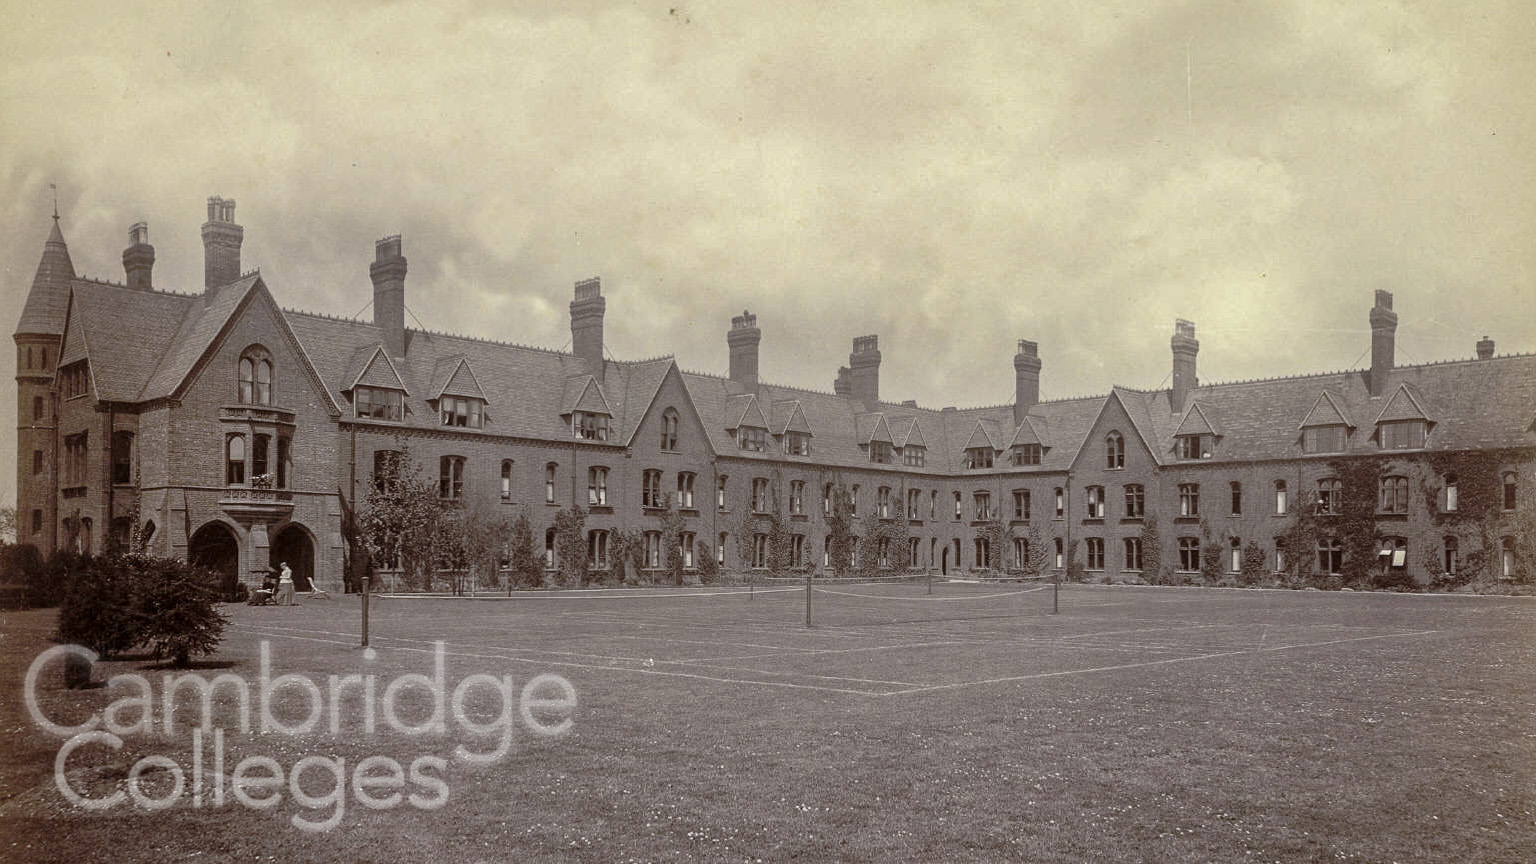 Girton College monochrome